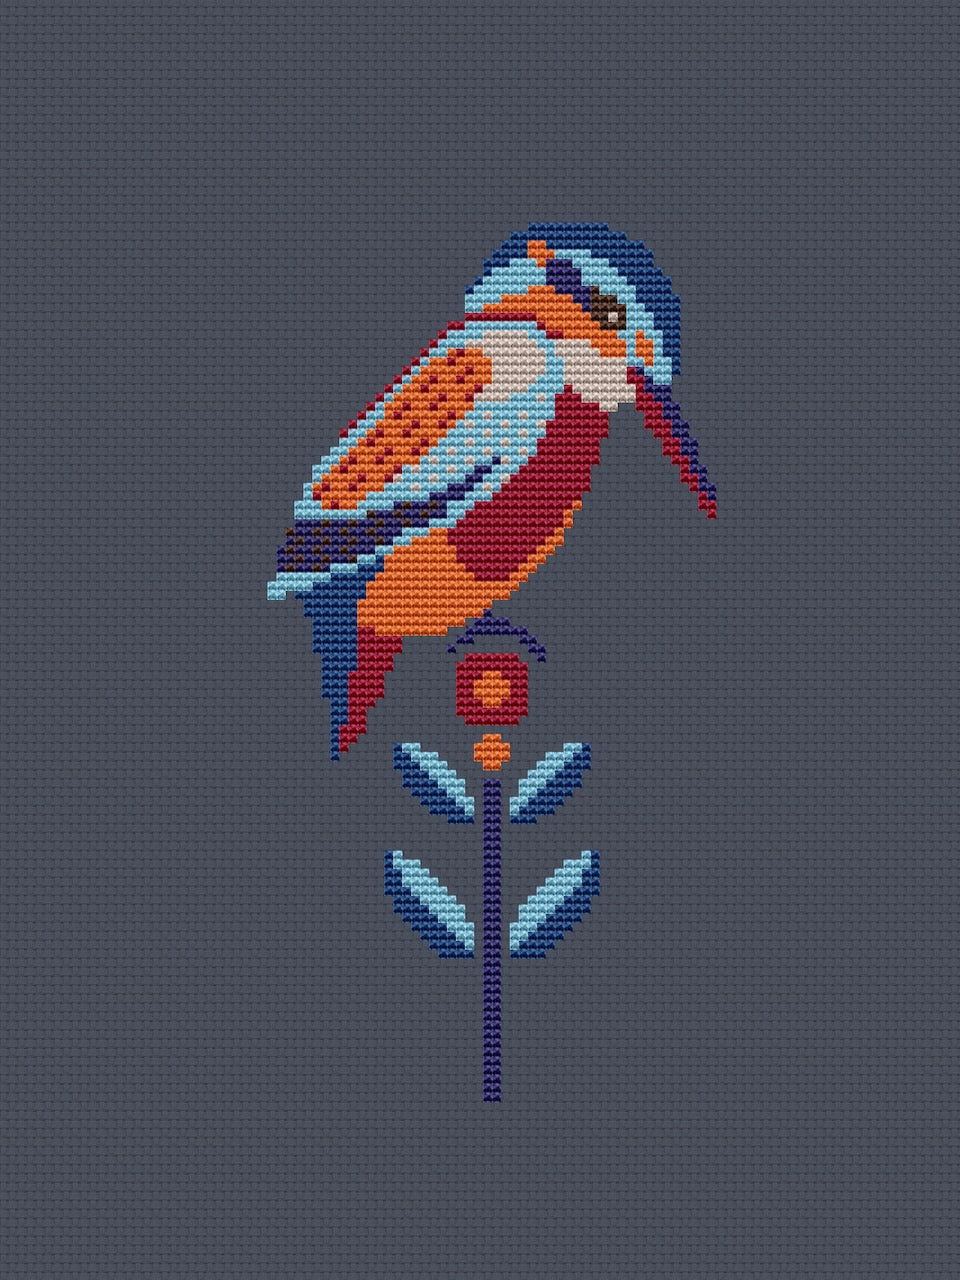 kingfisher embroidery pattern